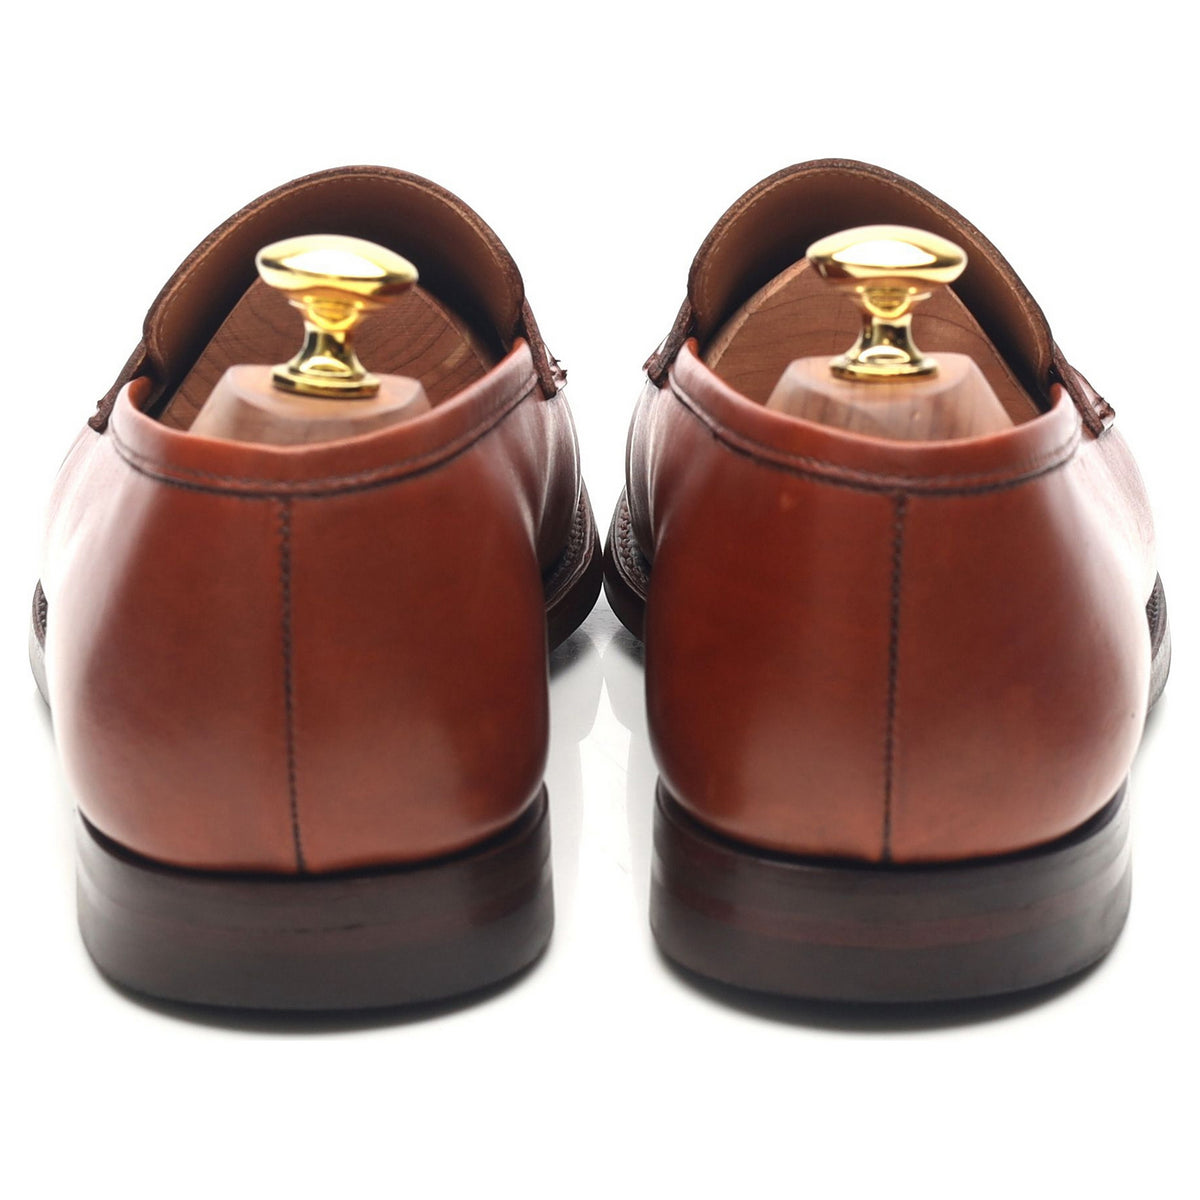 &#39;Boston&#39; Tan Brown Leather Loafers UK 8.5 E